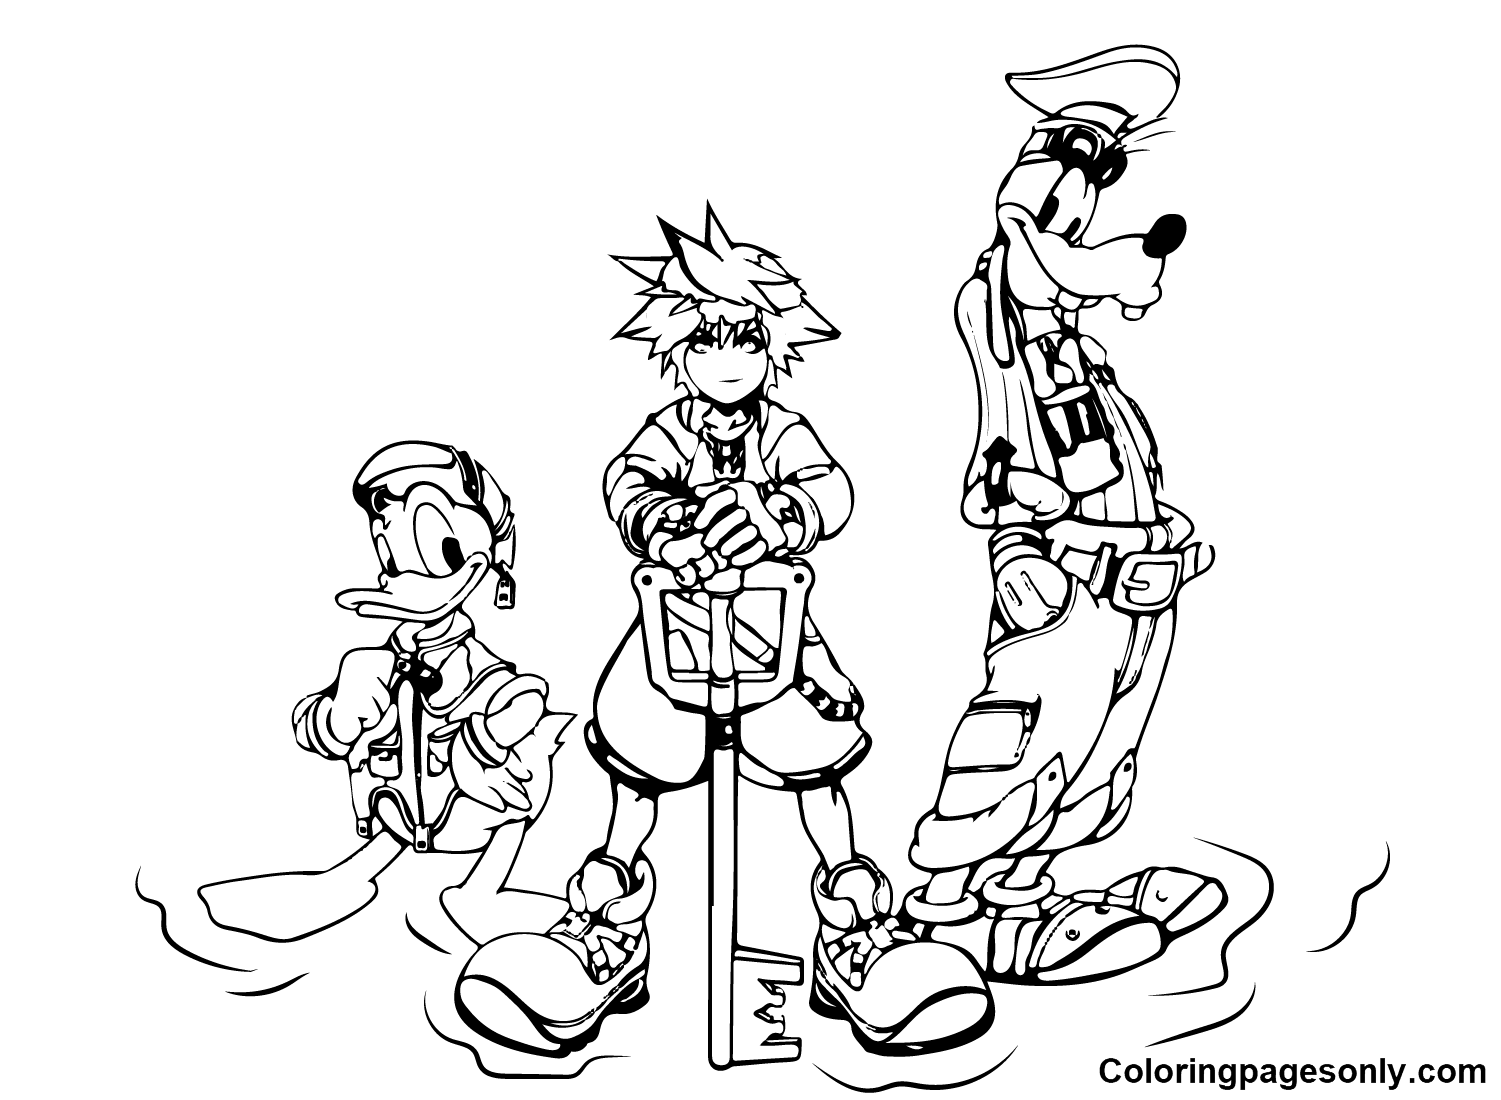 Kingdom Hearts 3 Coloring Page